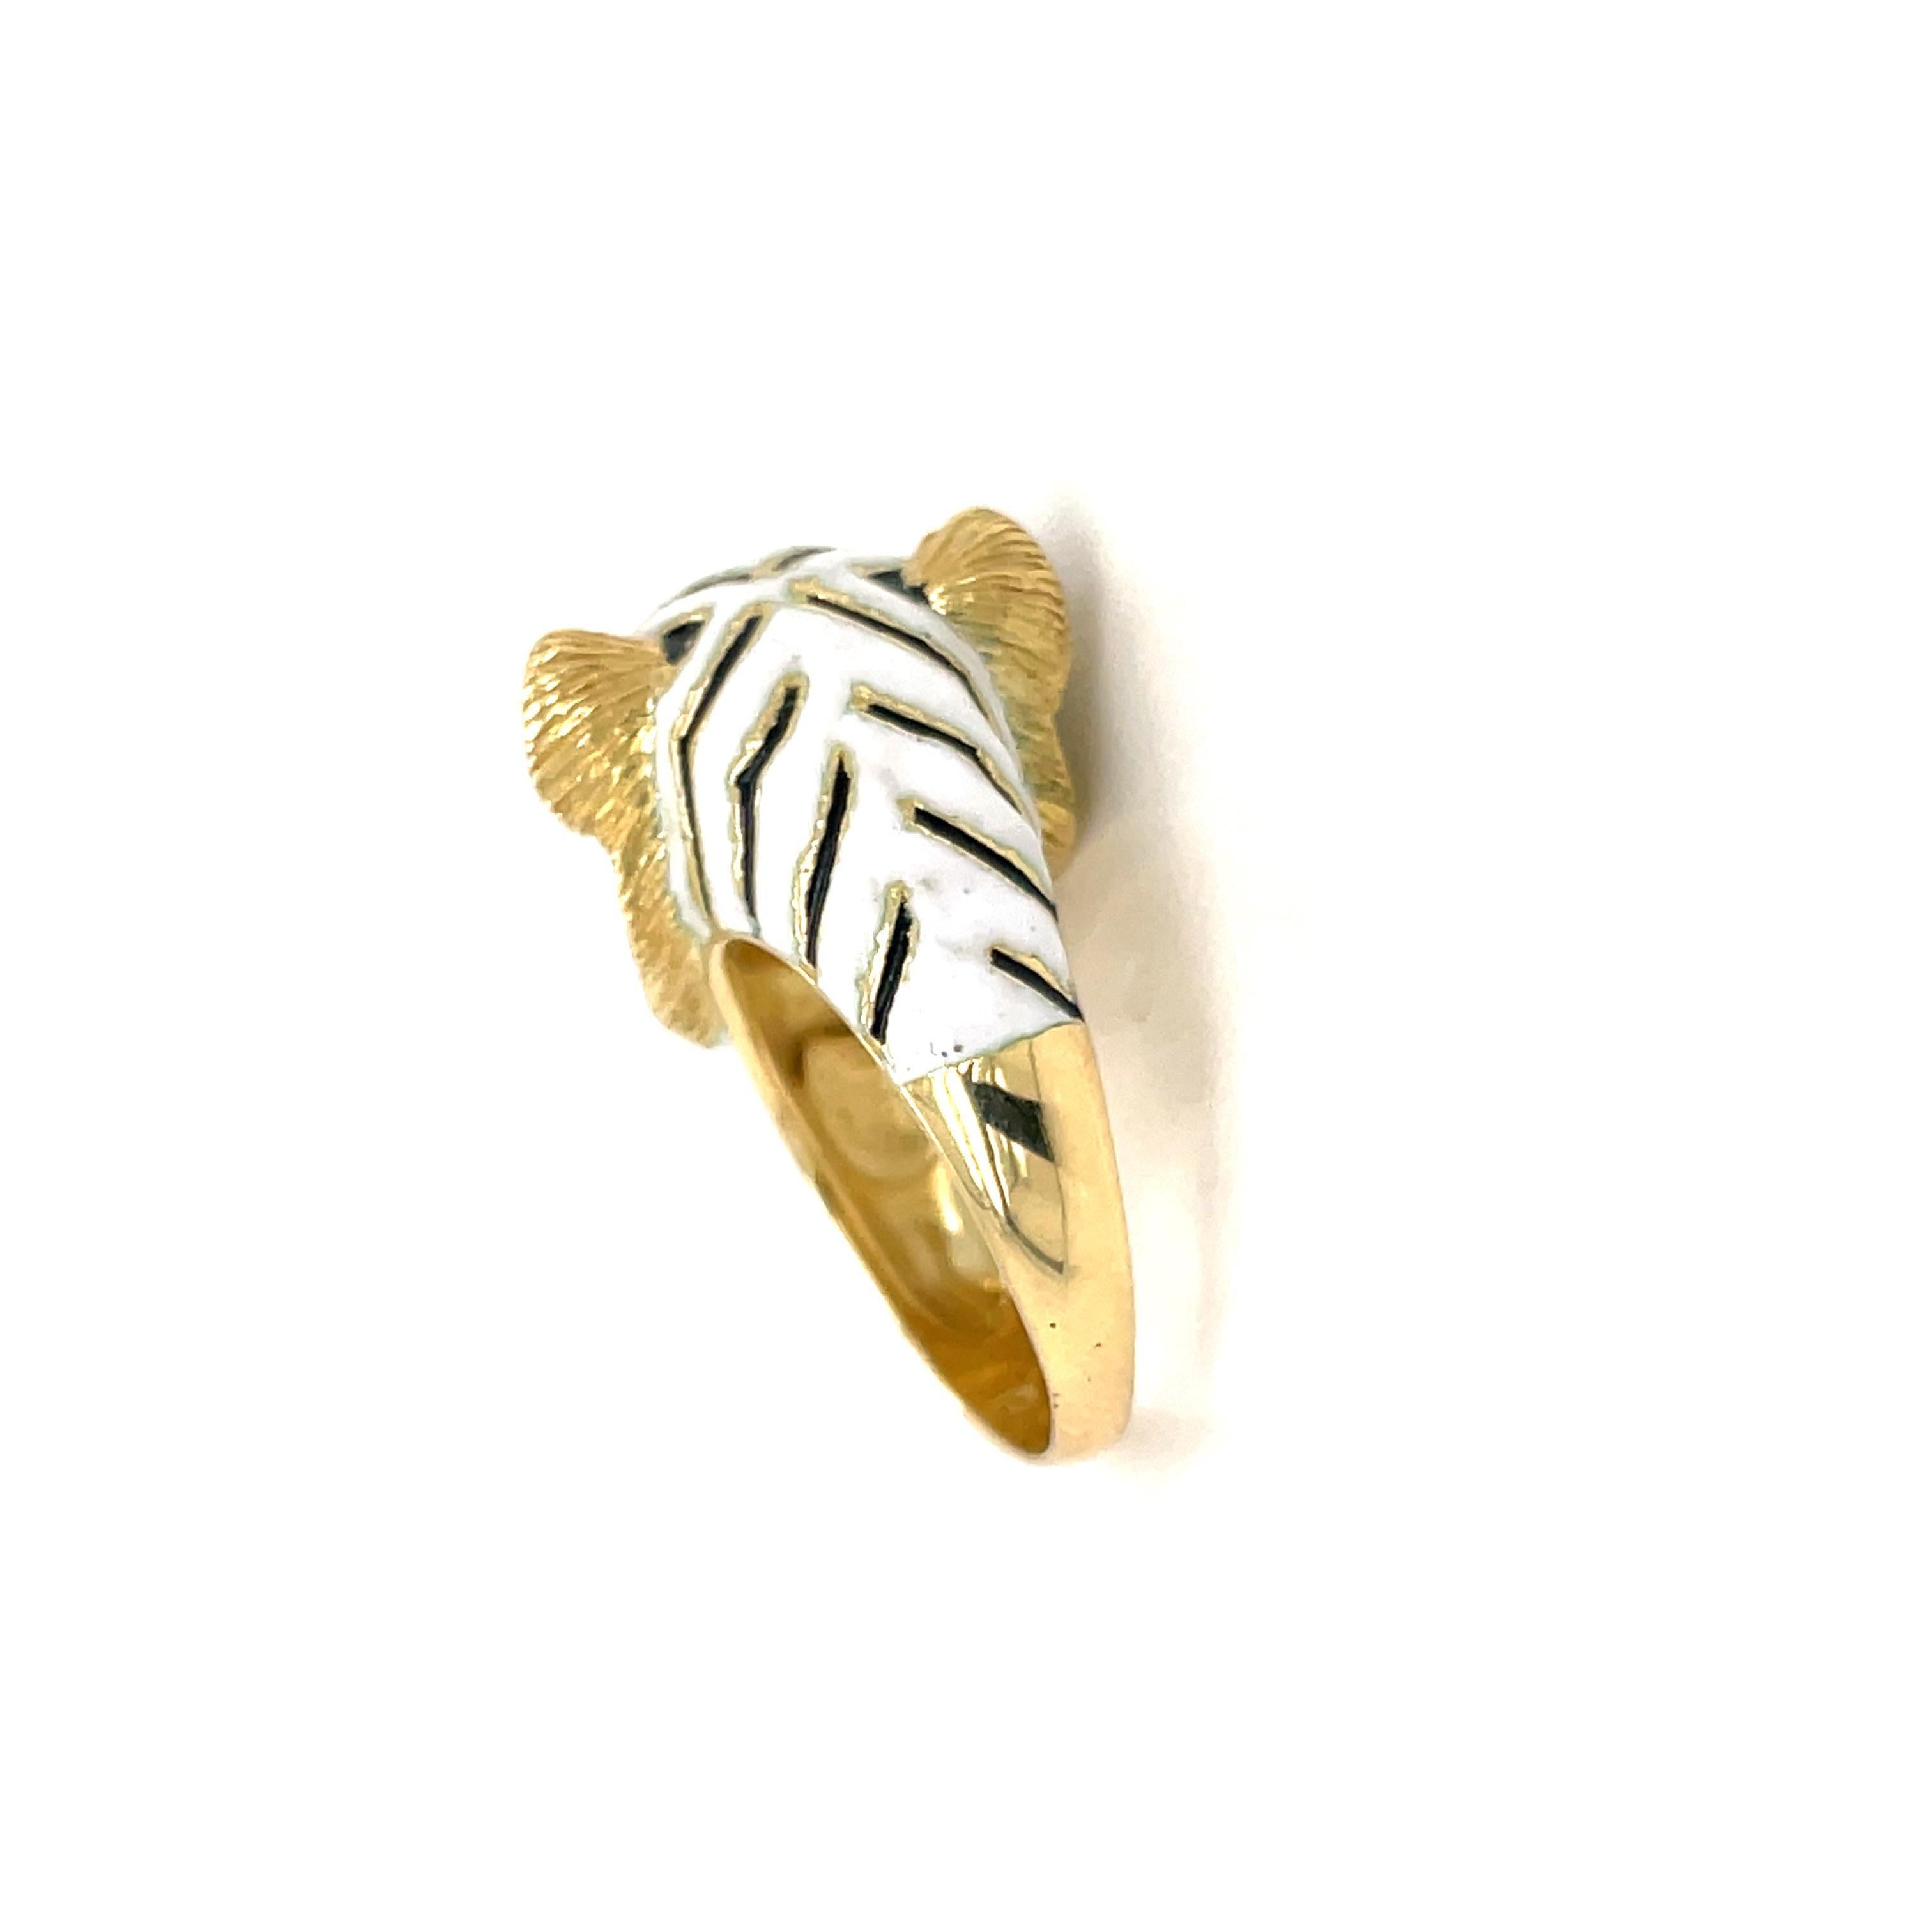 Frascarolo Italy Enamel Gold Tiger Ring 2